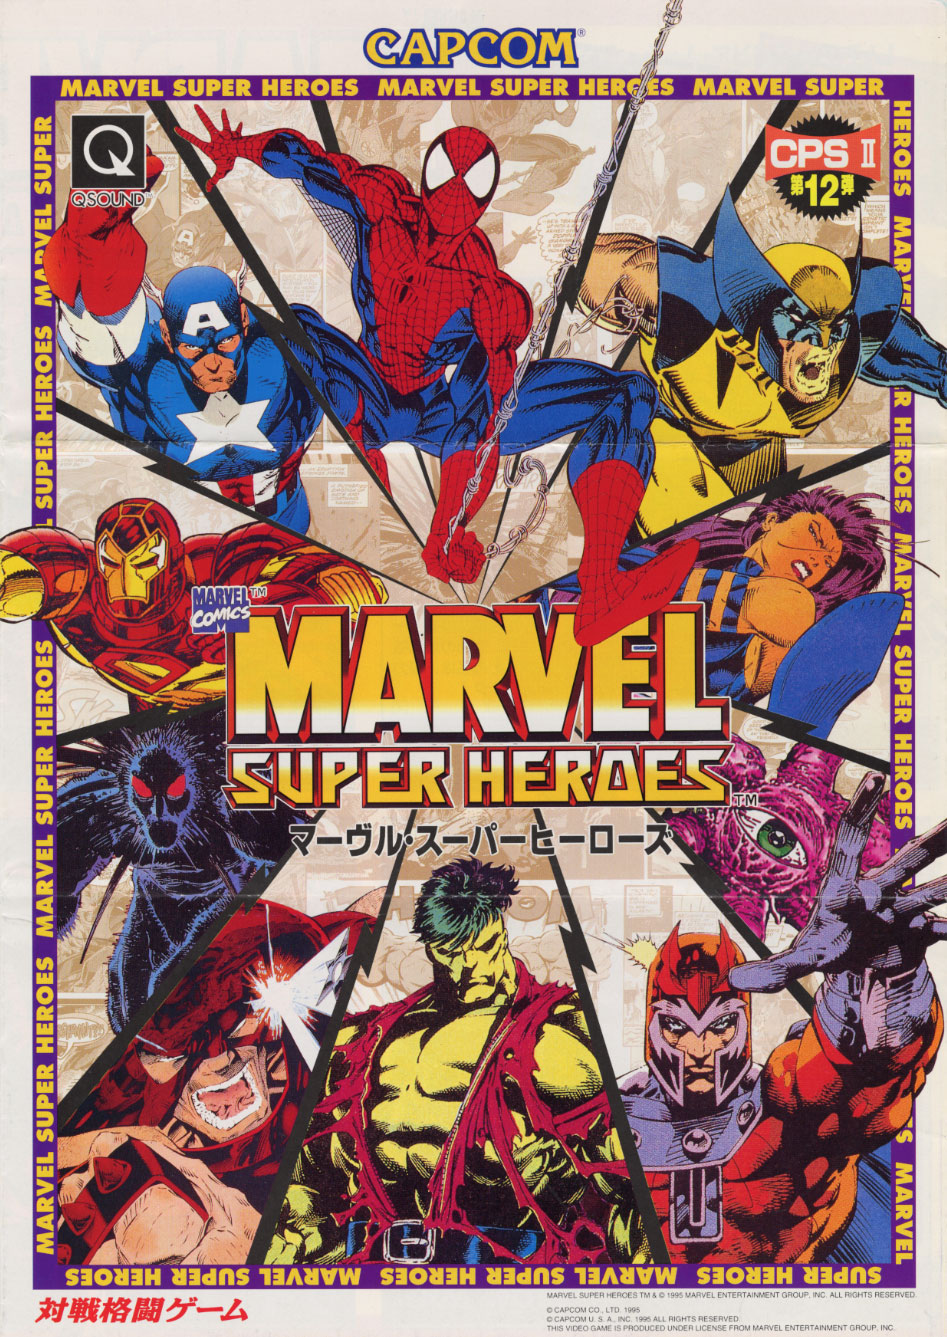 Marvel Super Heroes vs Street Fighter - SuperCombo Wiki